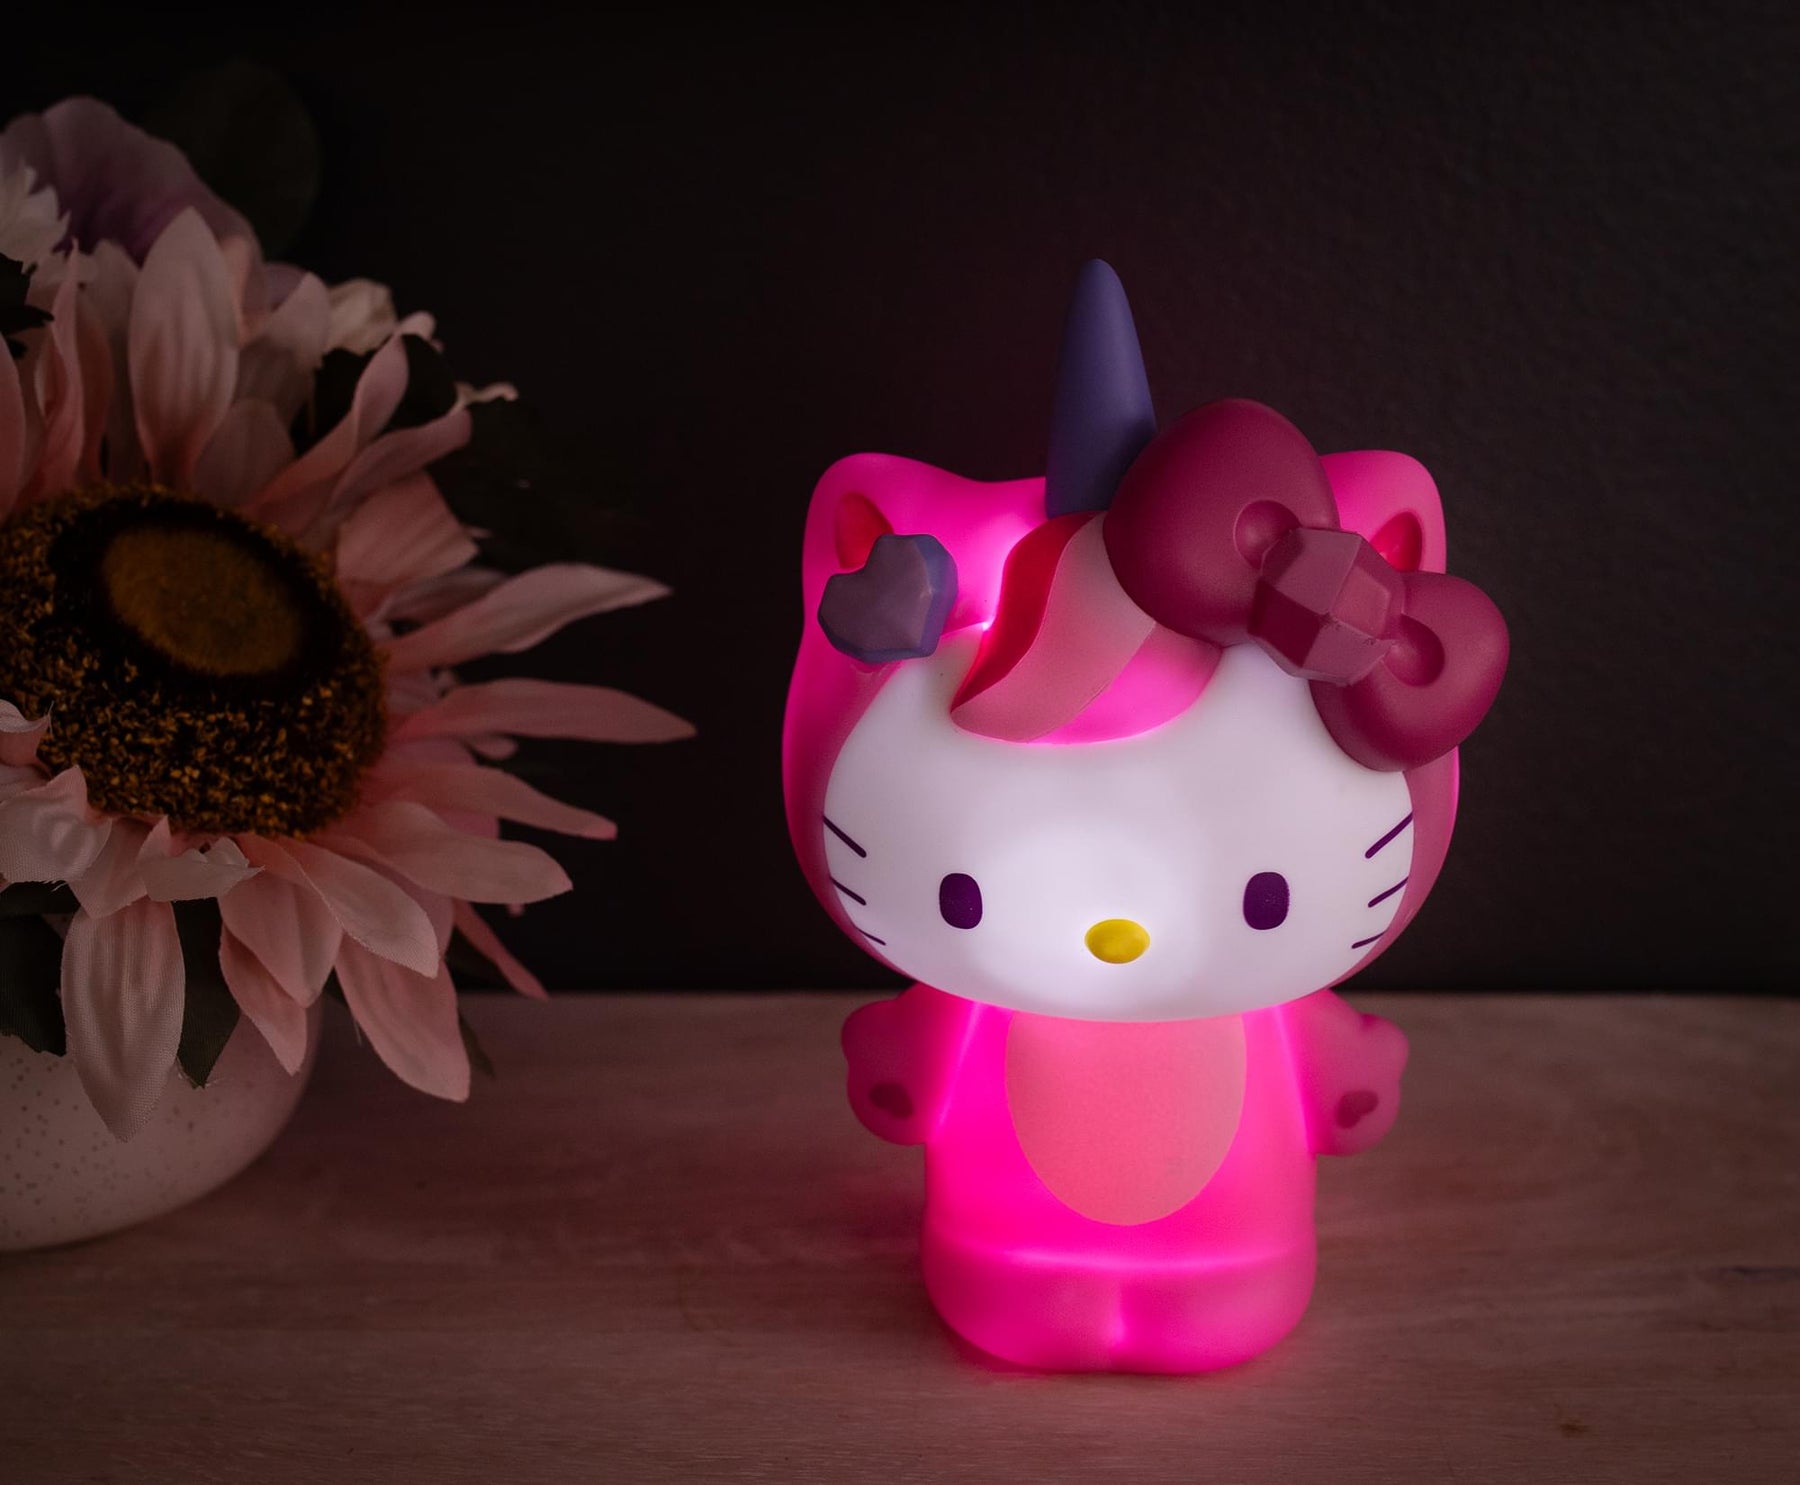 Sanrio Hello Kitty Unicorn 6-Inch PVC Figural Mood Light